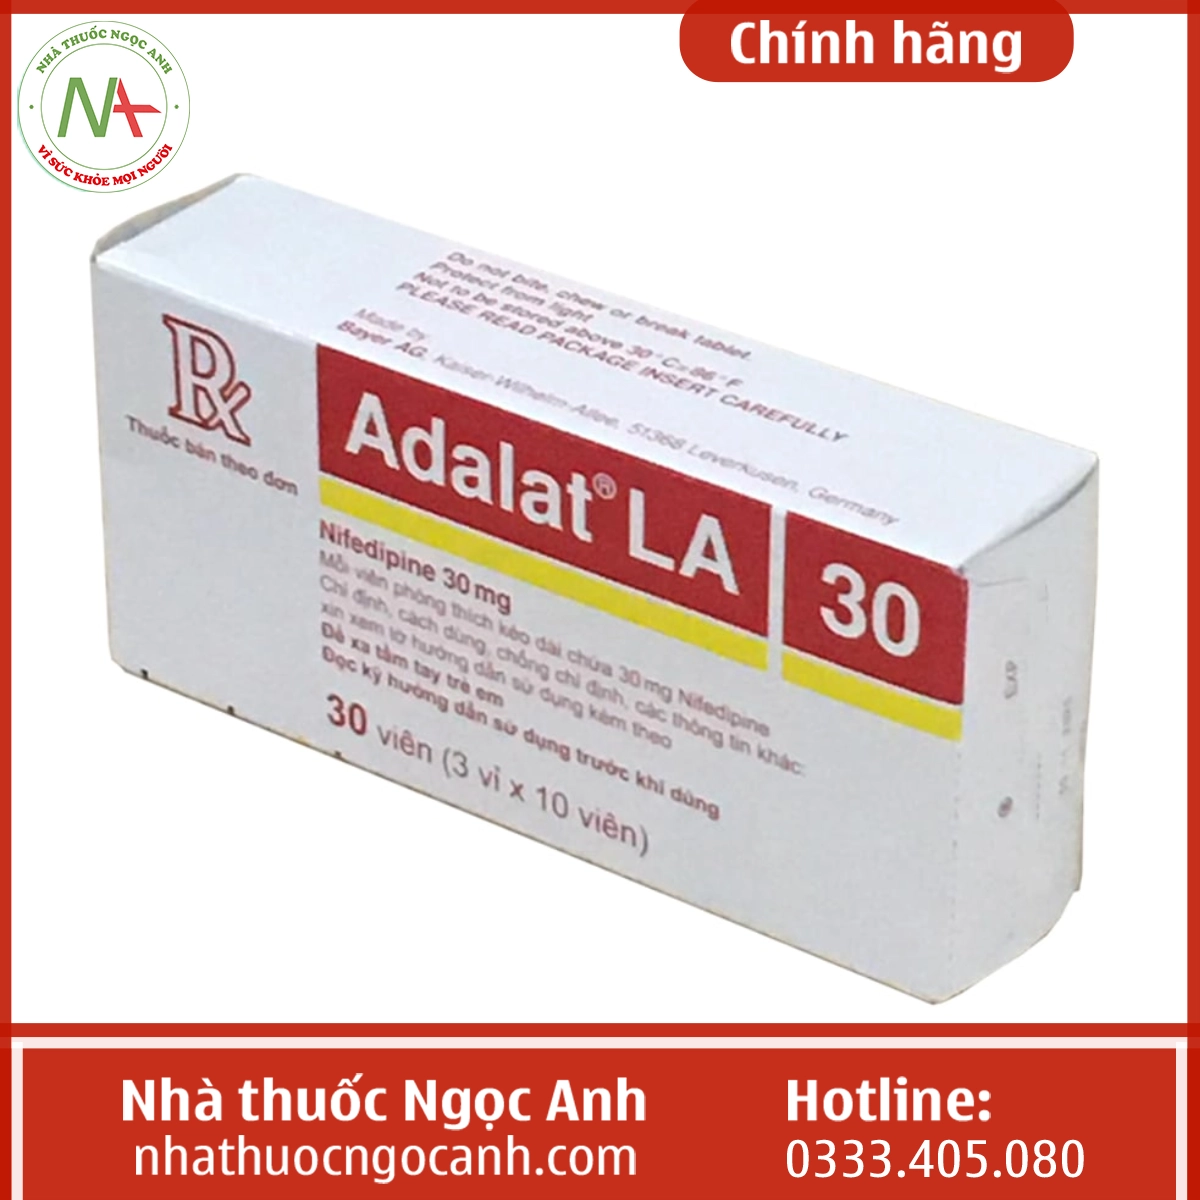 Hộp thuốc Adalat LA 30